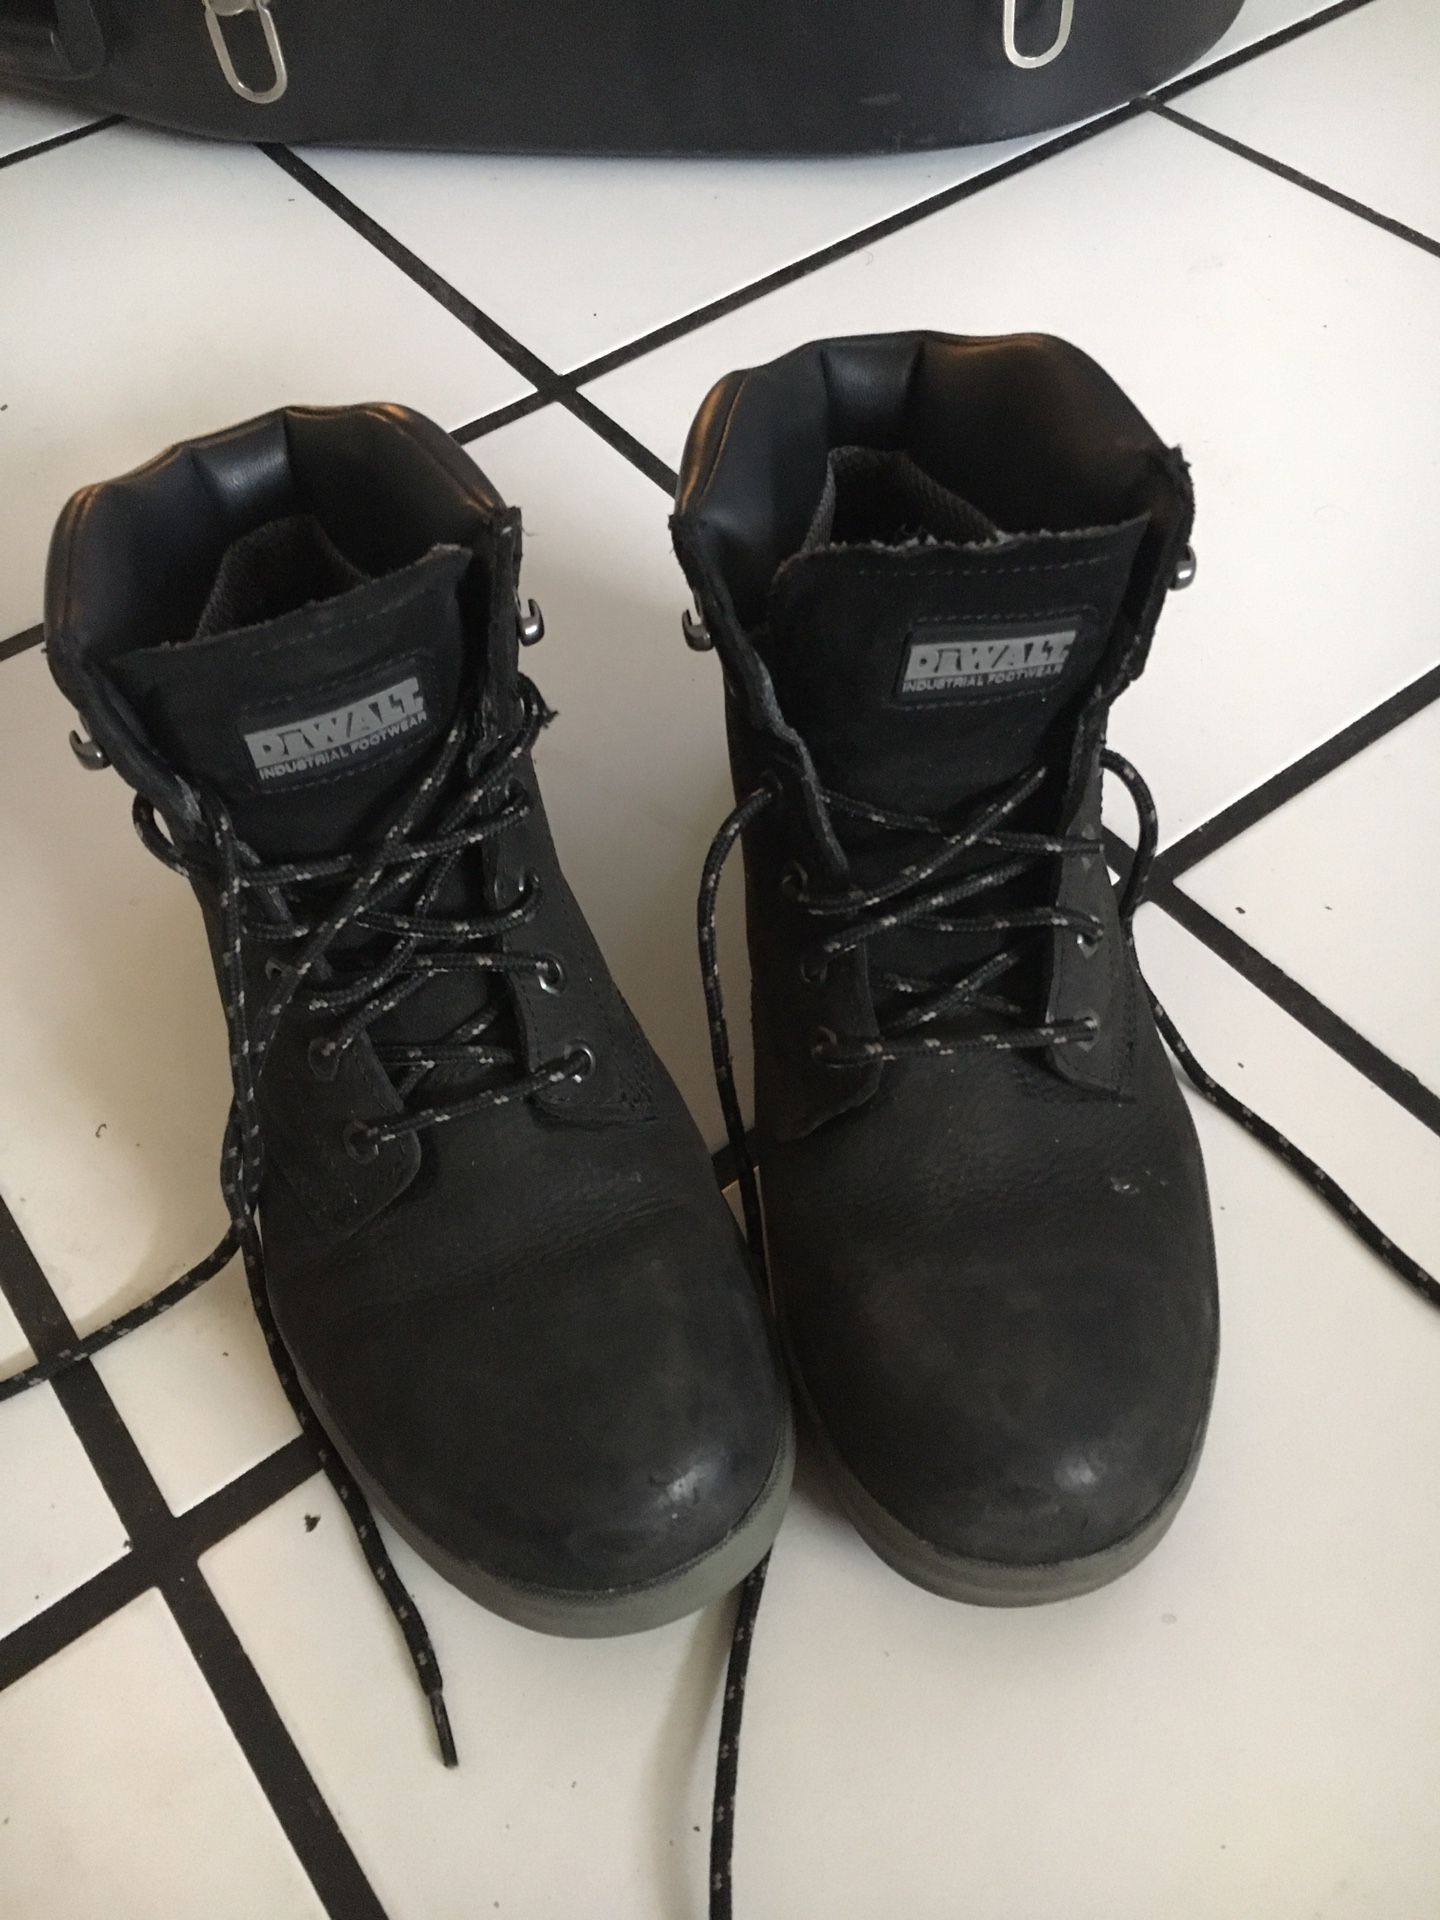 Men’s Dewalt Steel Toe Work Boots Size 11